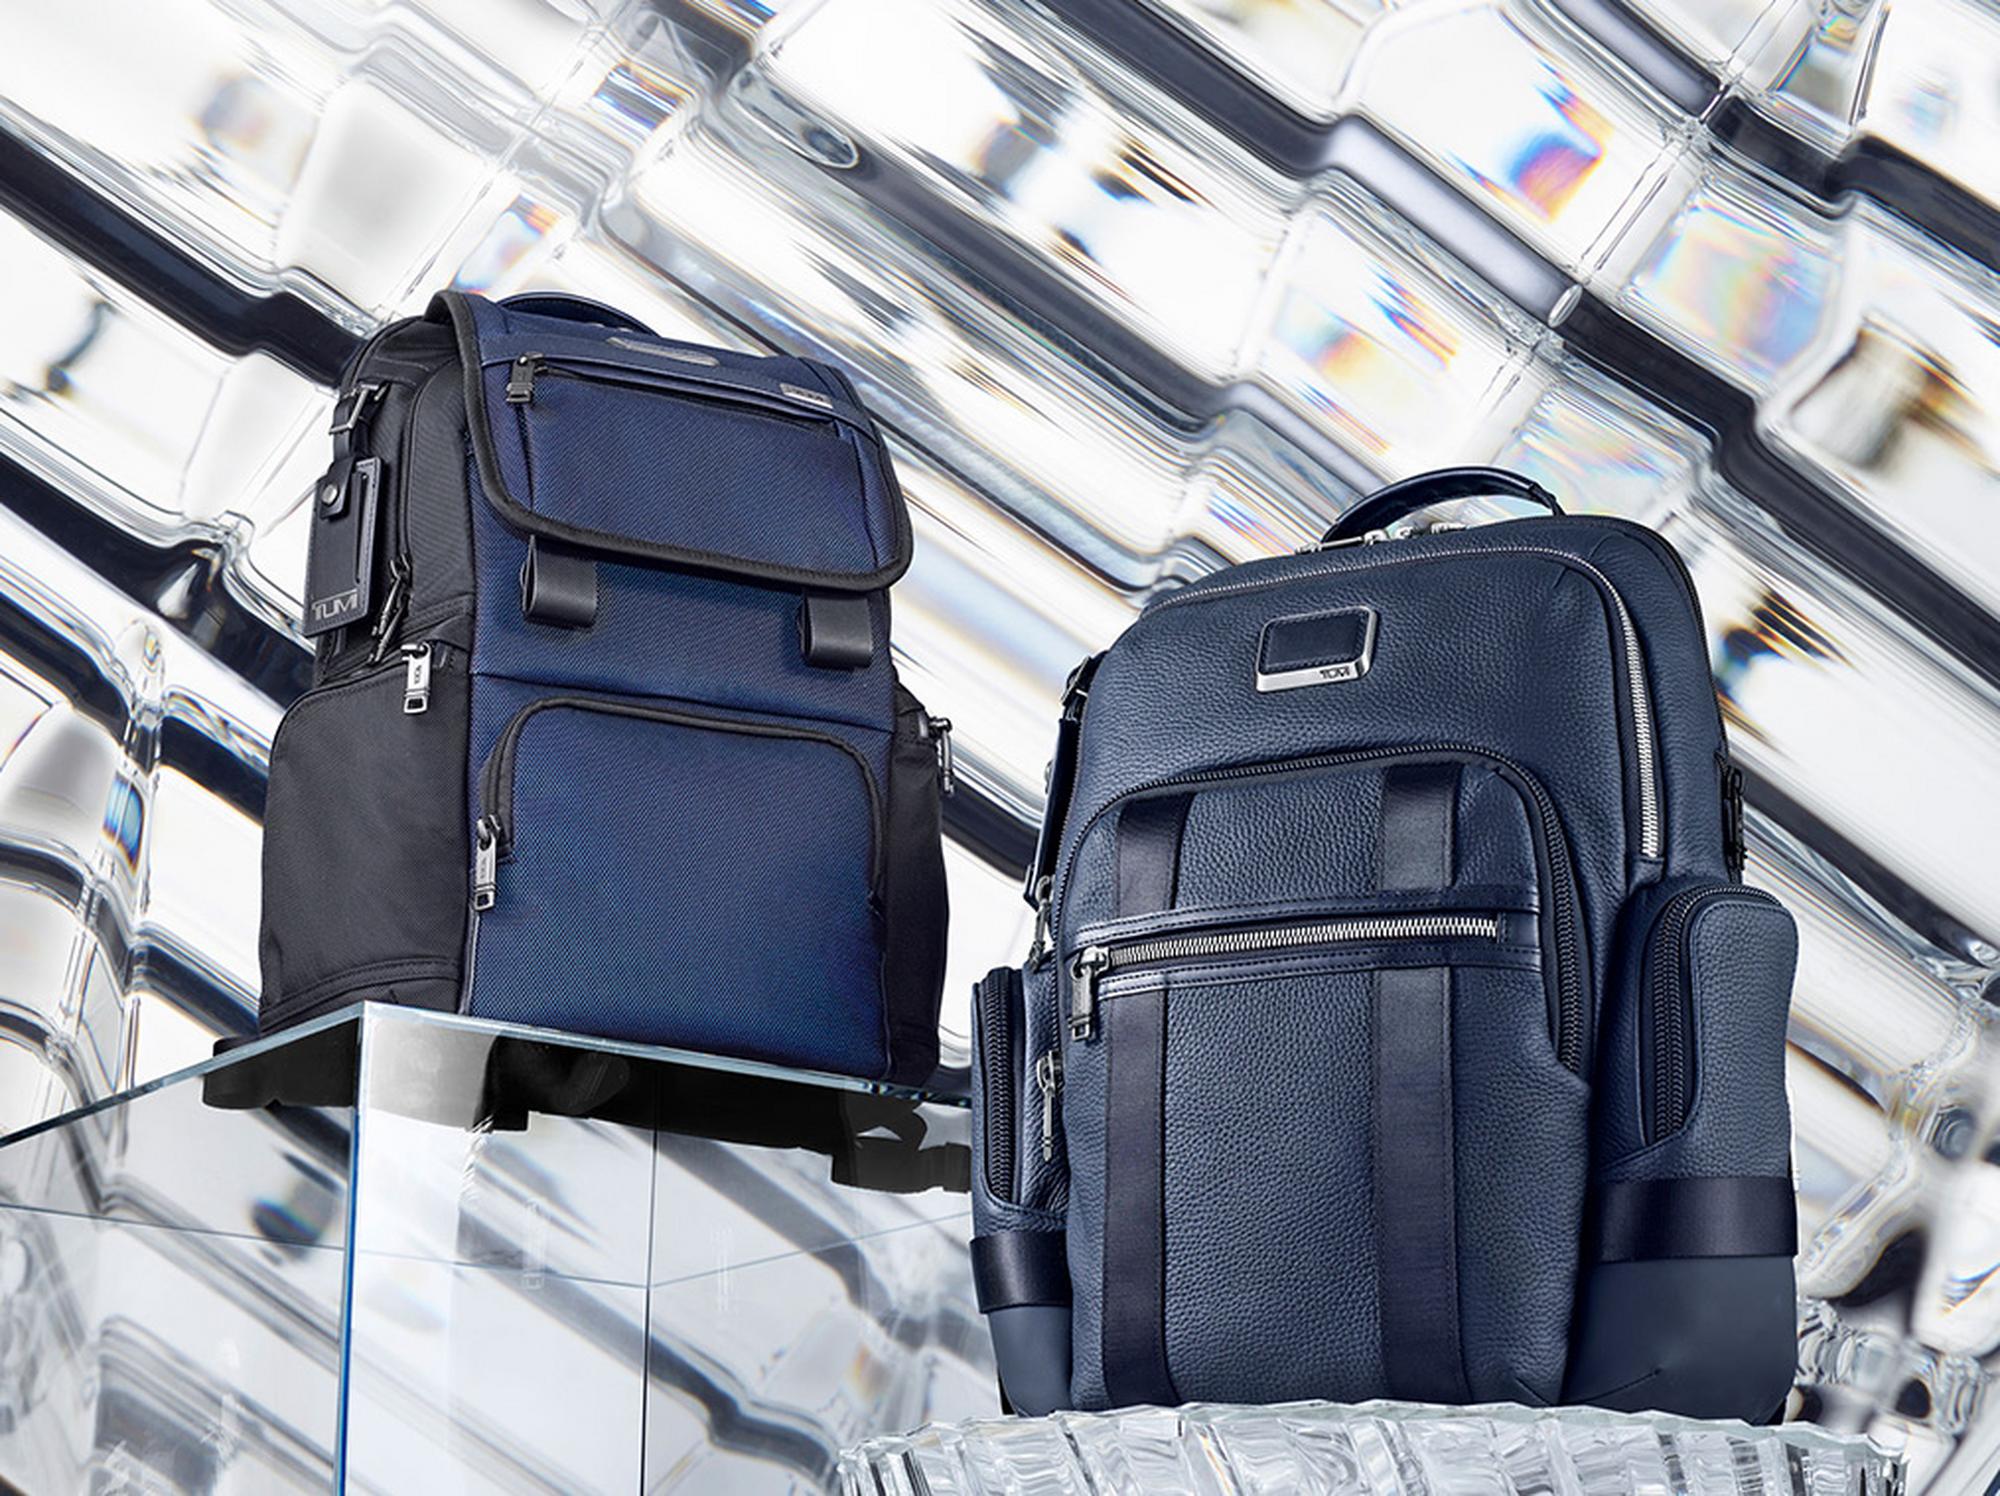 Luggage, Backpacks, Bags & More - TUMI US